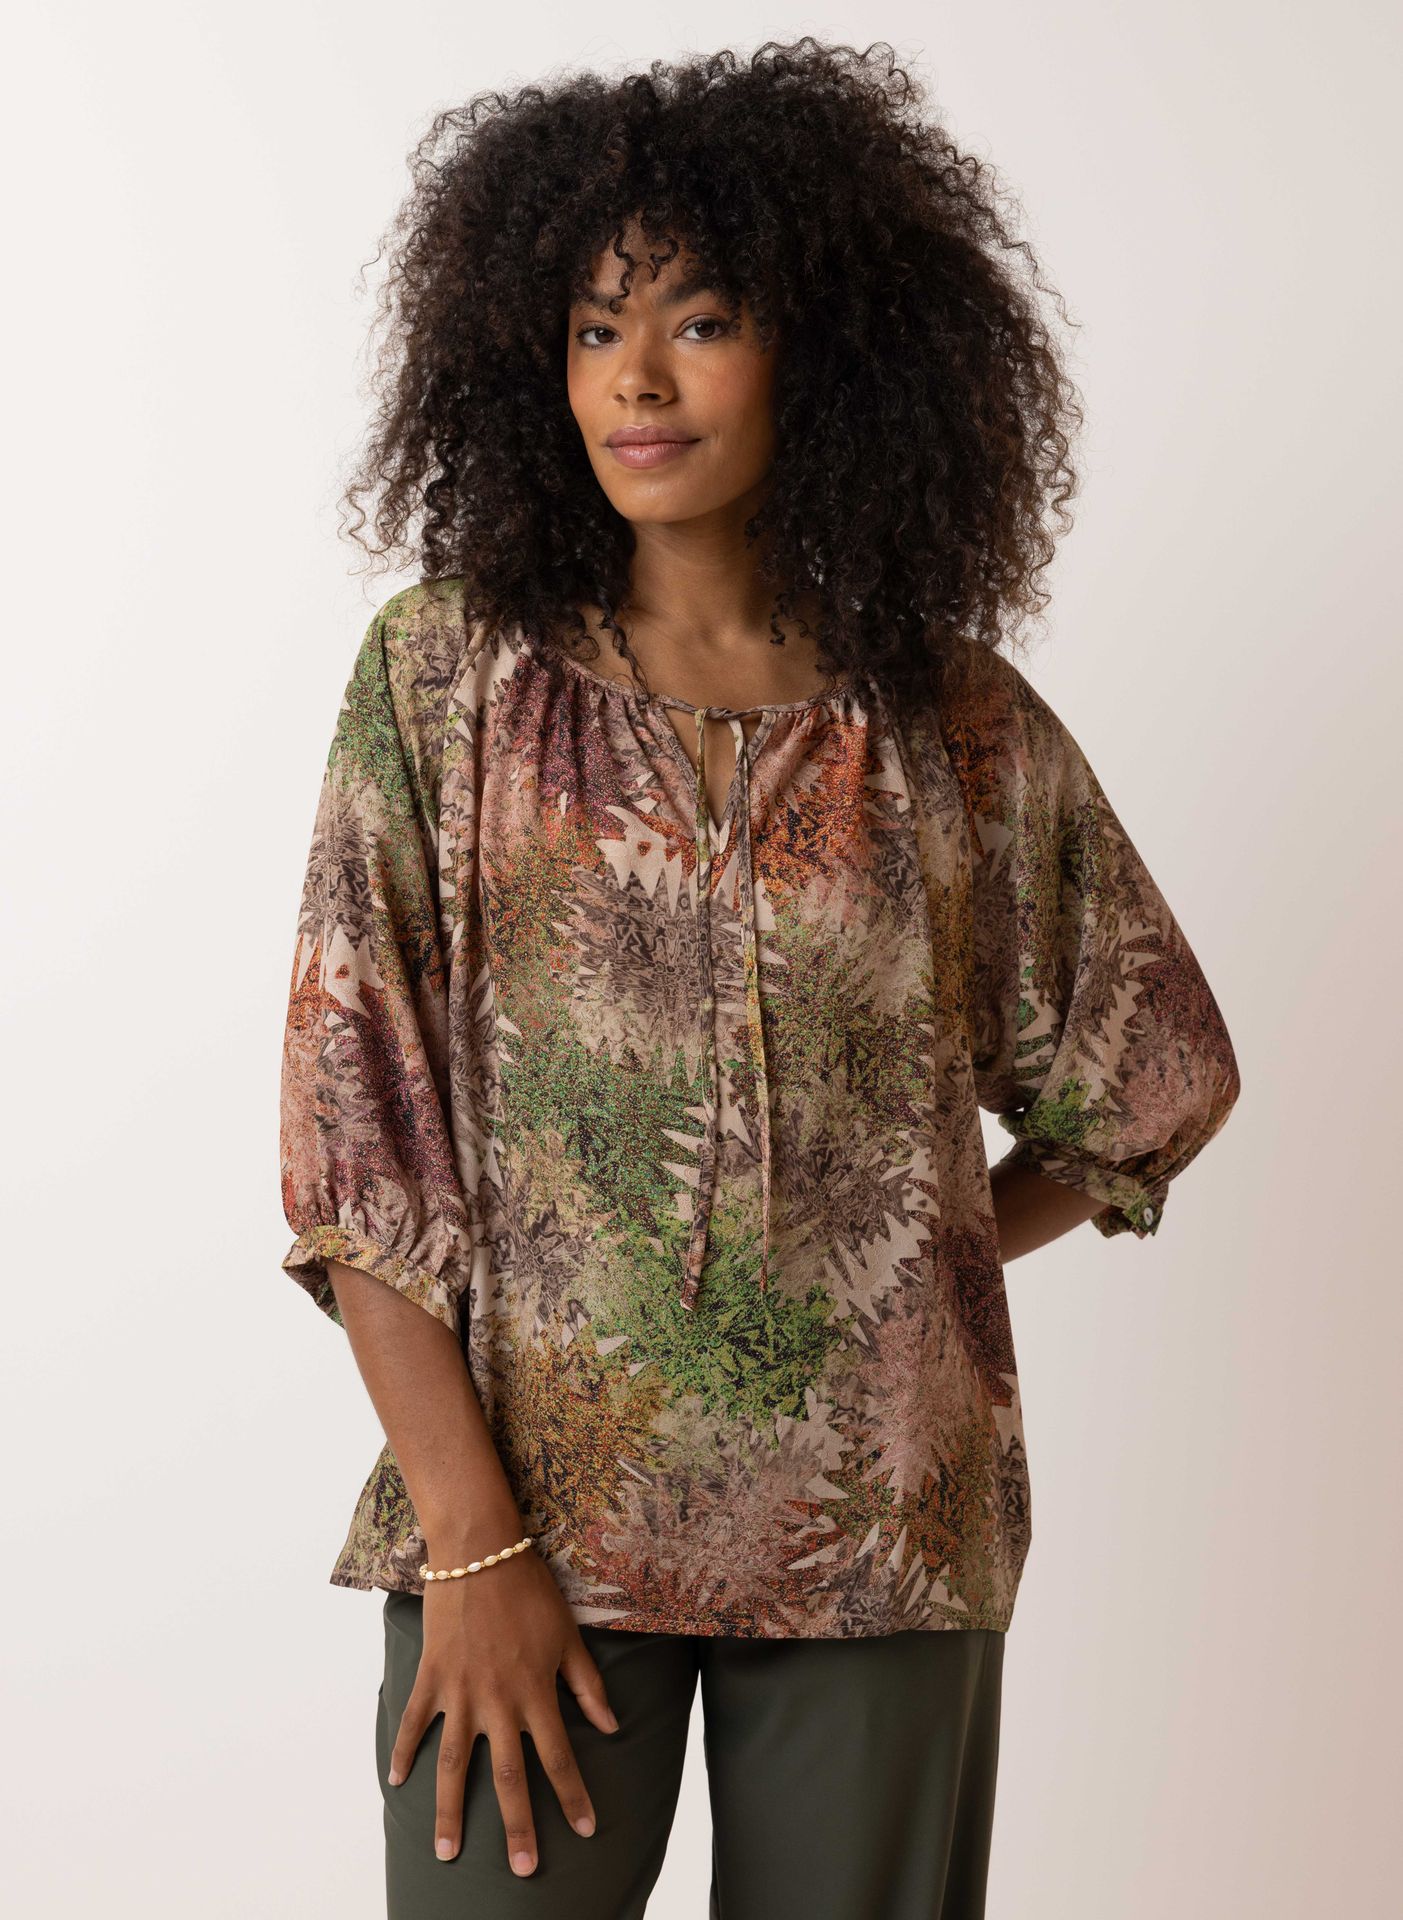 Norah Meerkleurige blouse sand multicolor 214368-121